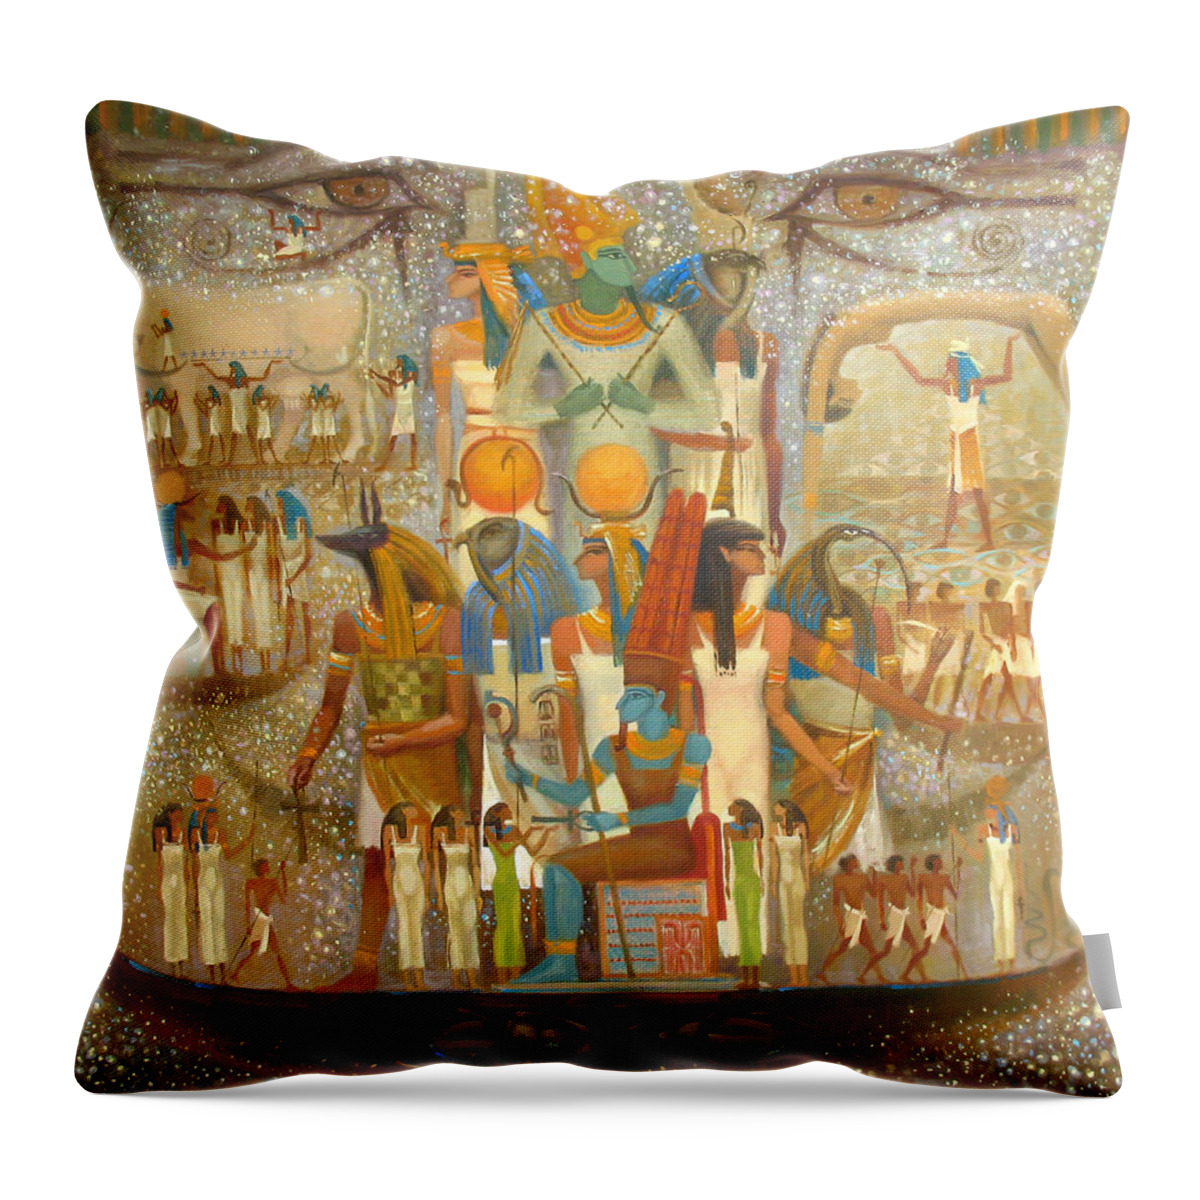 Osiris Throw Pillow featuring the painting Osiris by Valentina Kondrashova